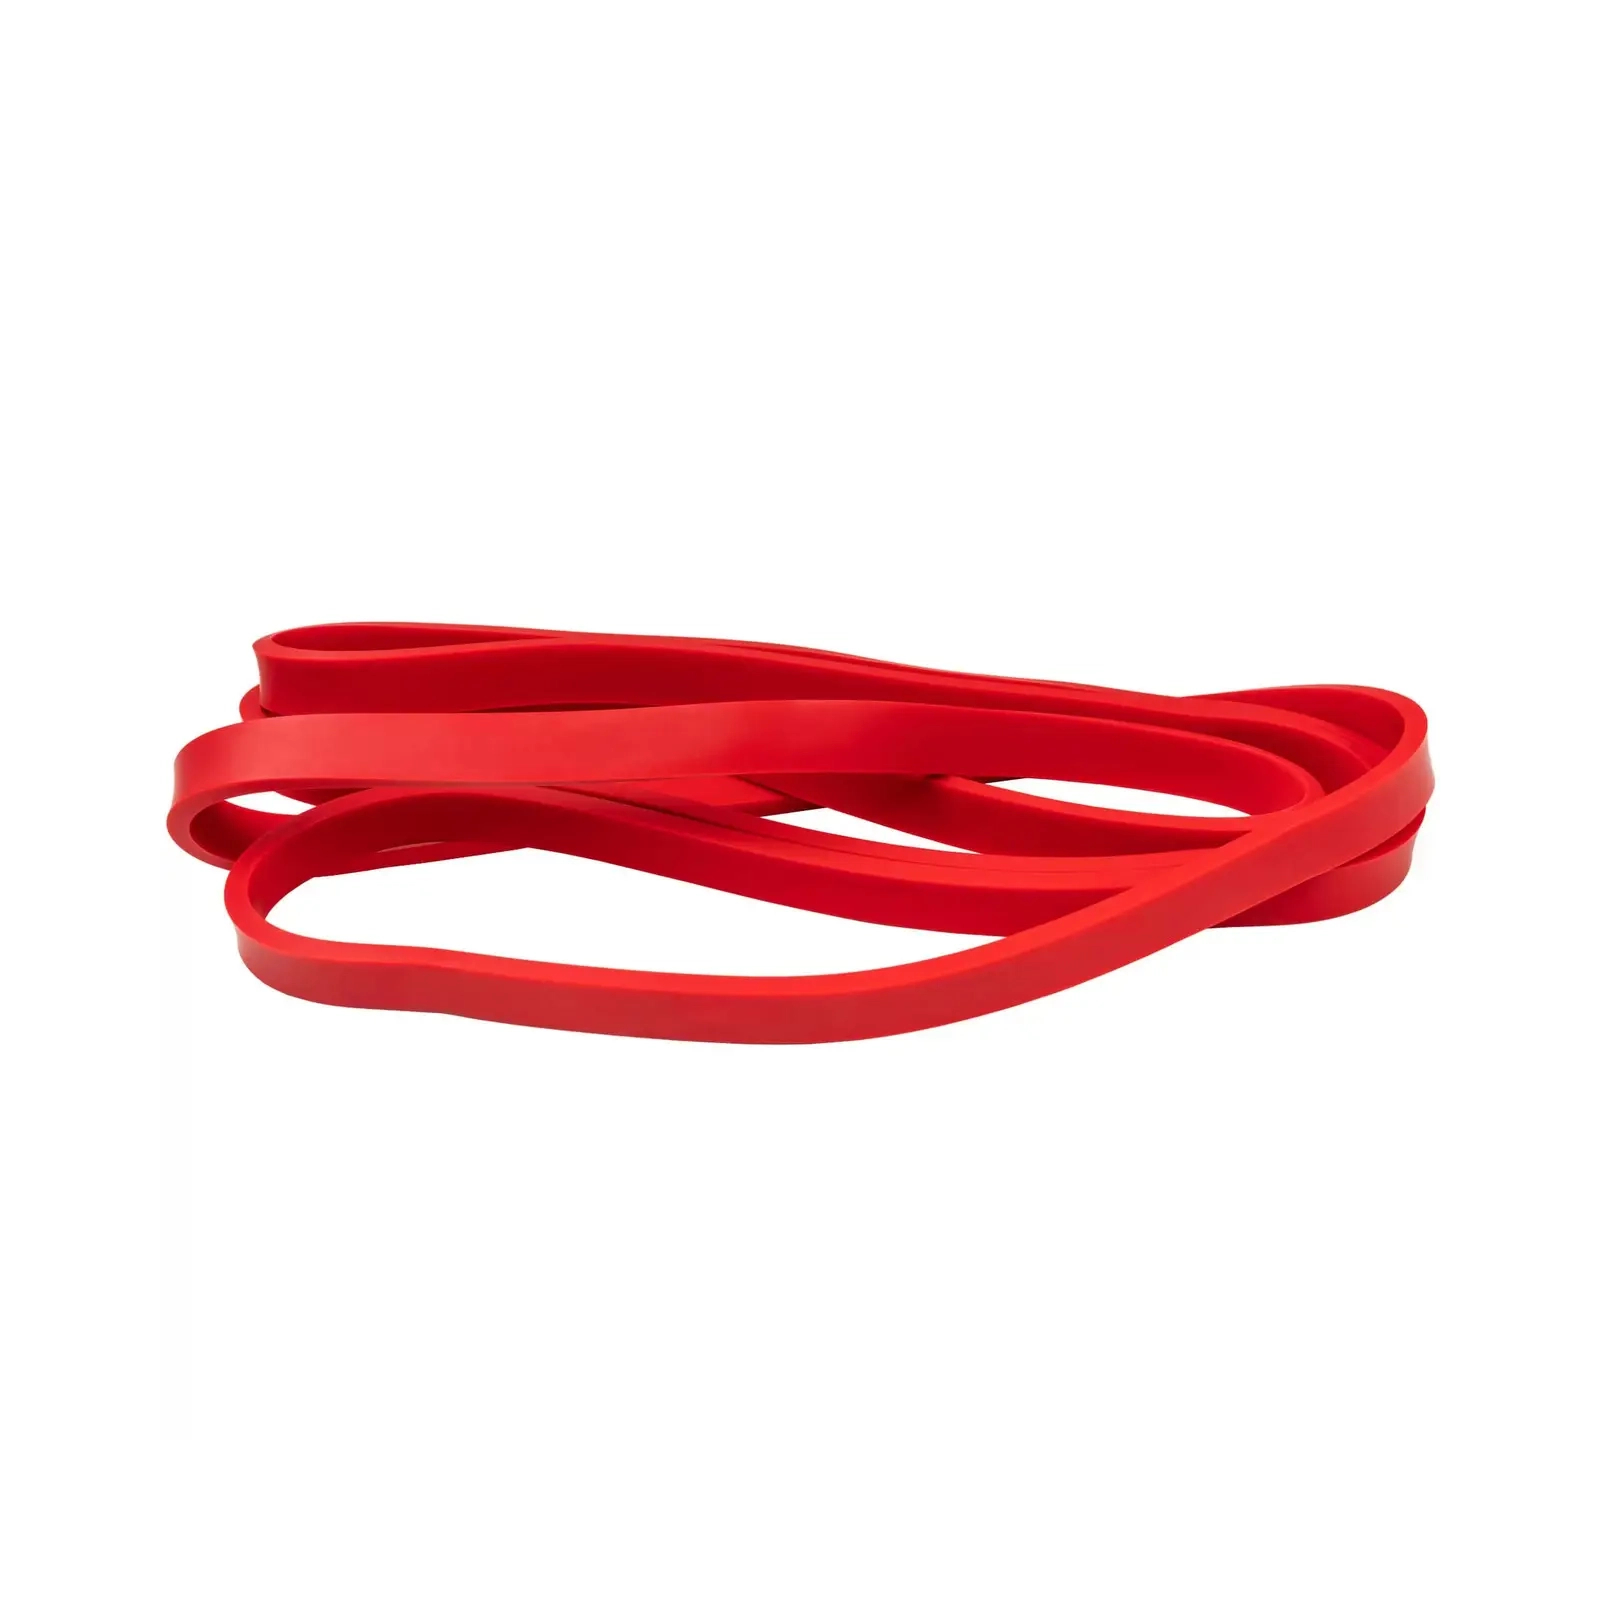 Эспандер U-Powex Pull up band (4.5-16kg) Red (UP_1050_Red) изображение 2